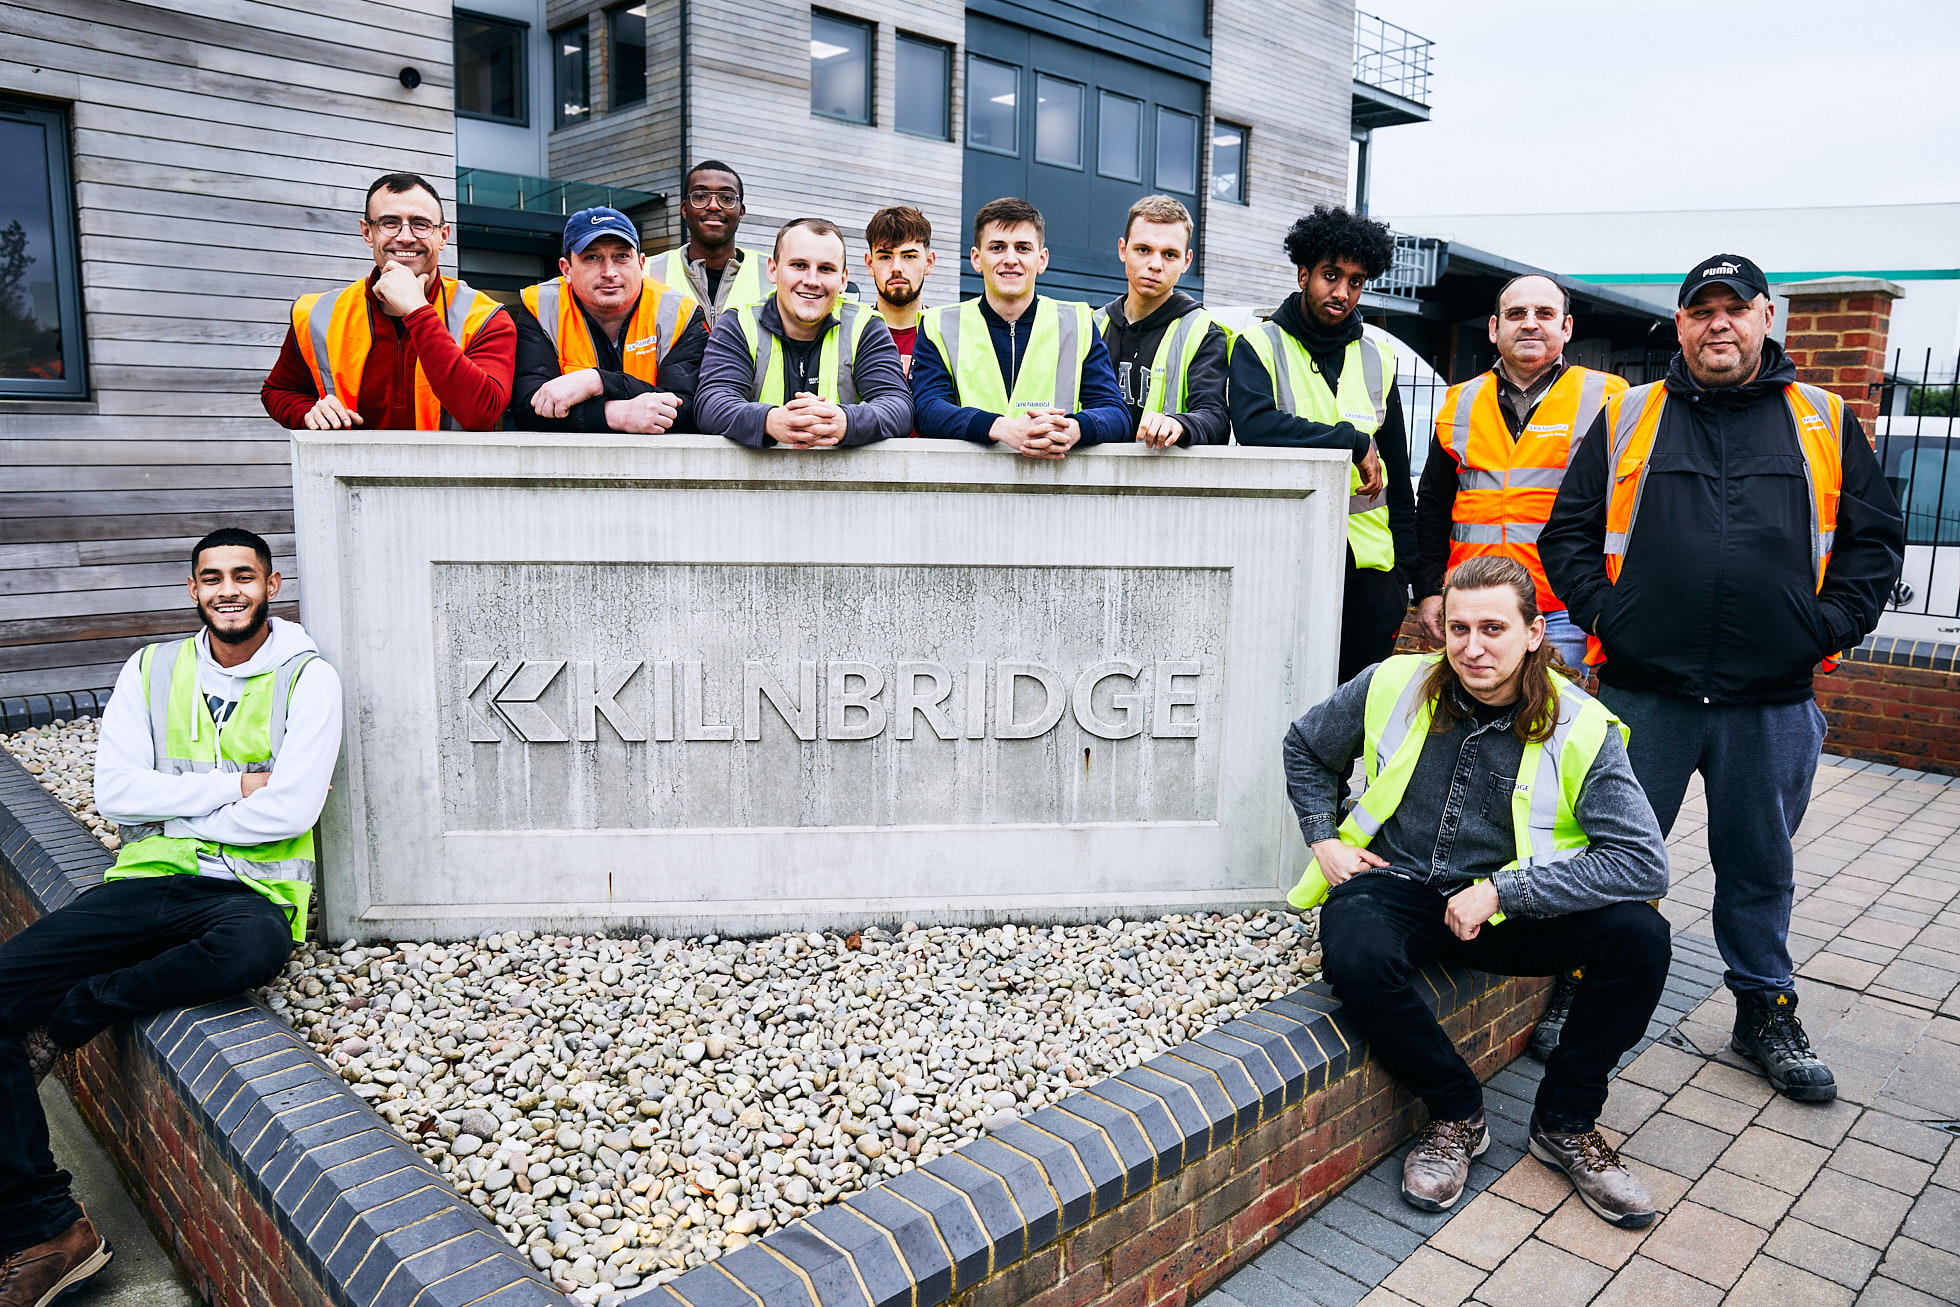 Apprenitice Day for Kilnbridge Construction, comm by Charlotte Fordham